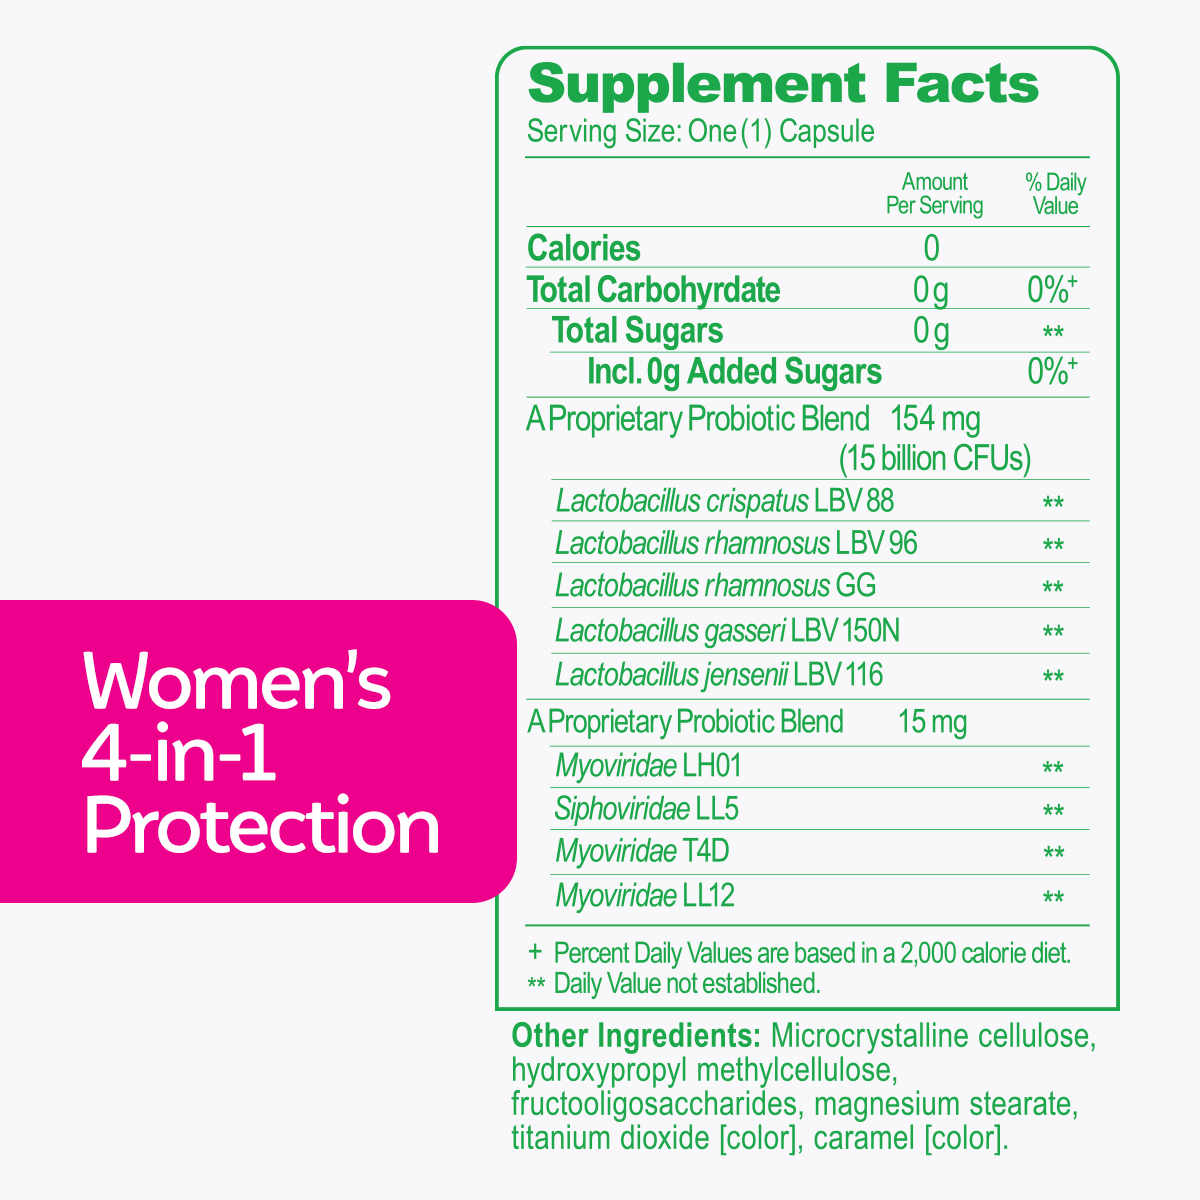 Women's 4-in-1 supplement facts